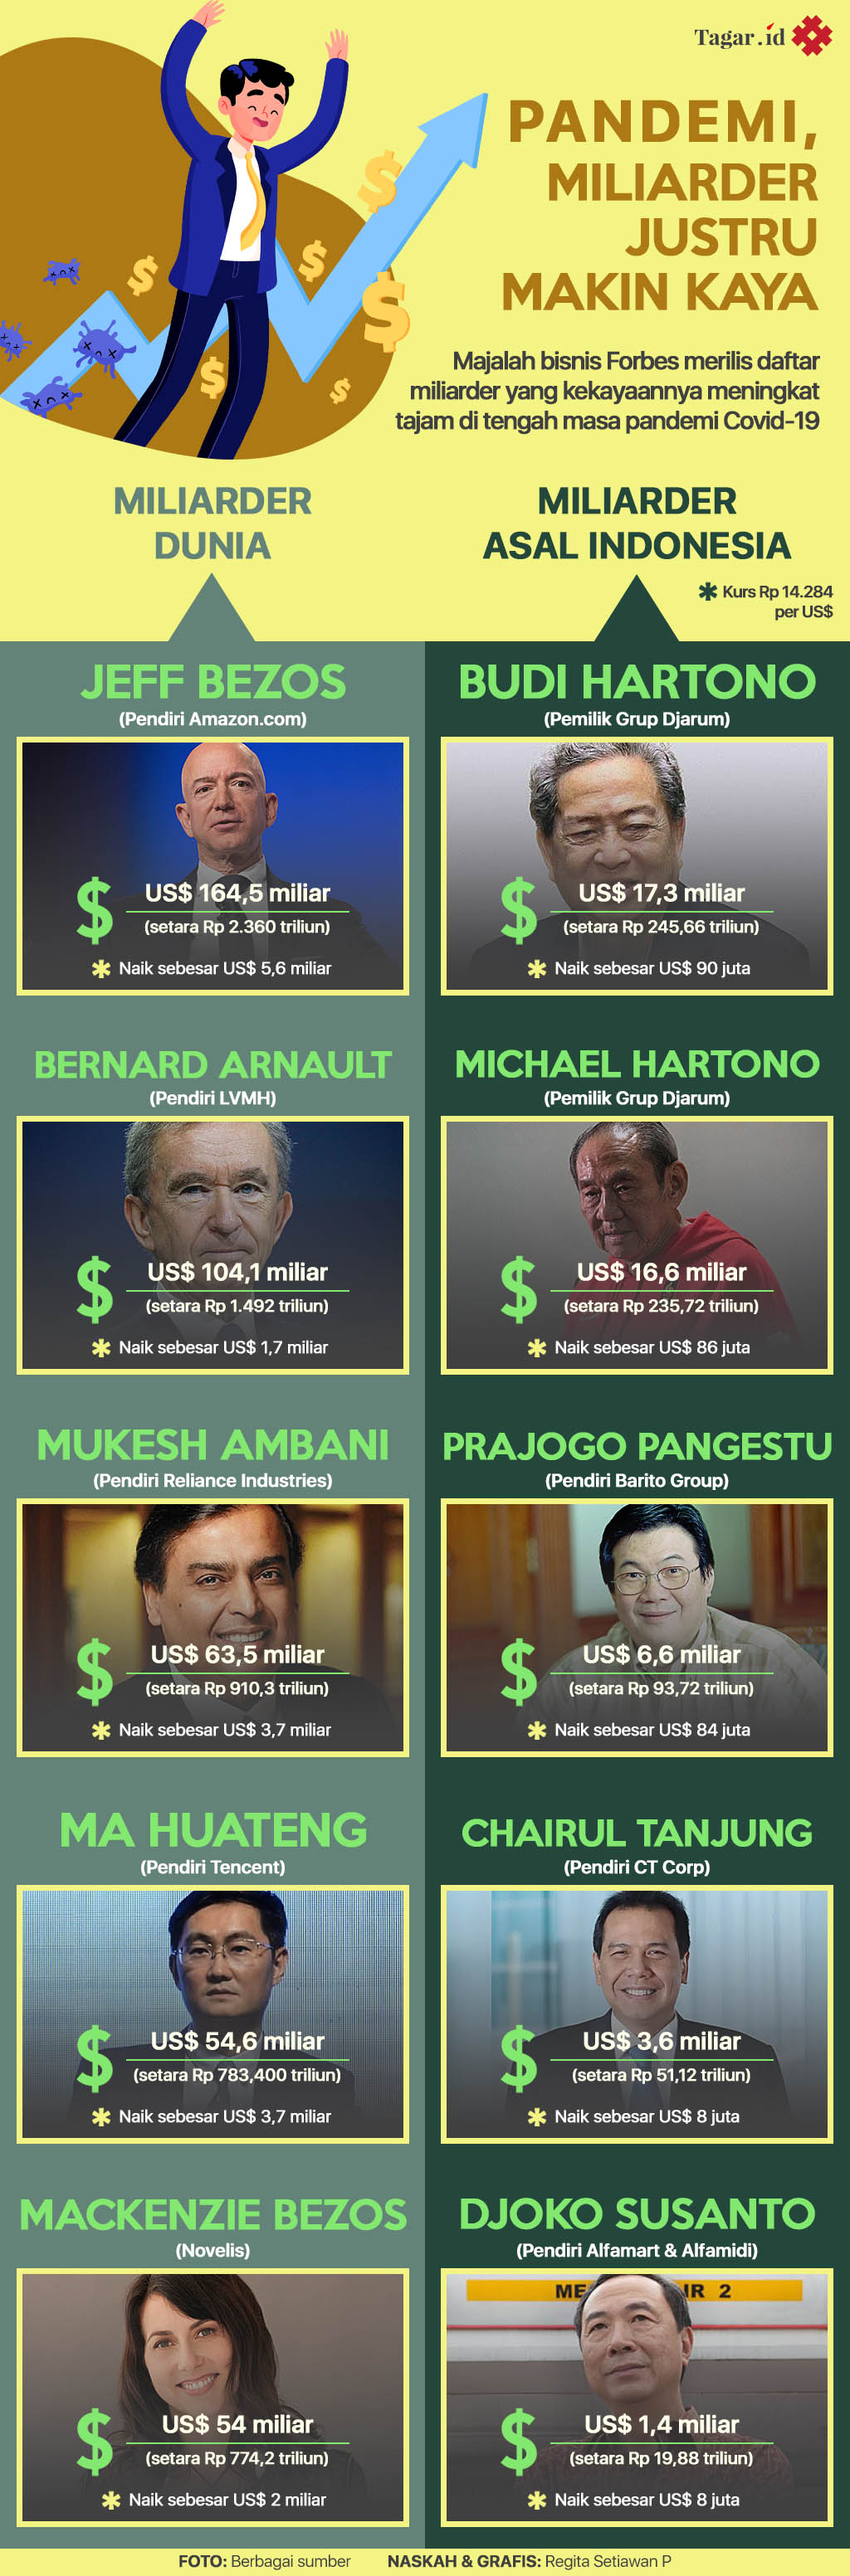 Infografis: Pandemi, Miliarder Justru Makin Kaya